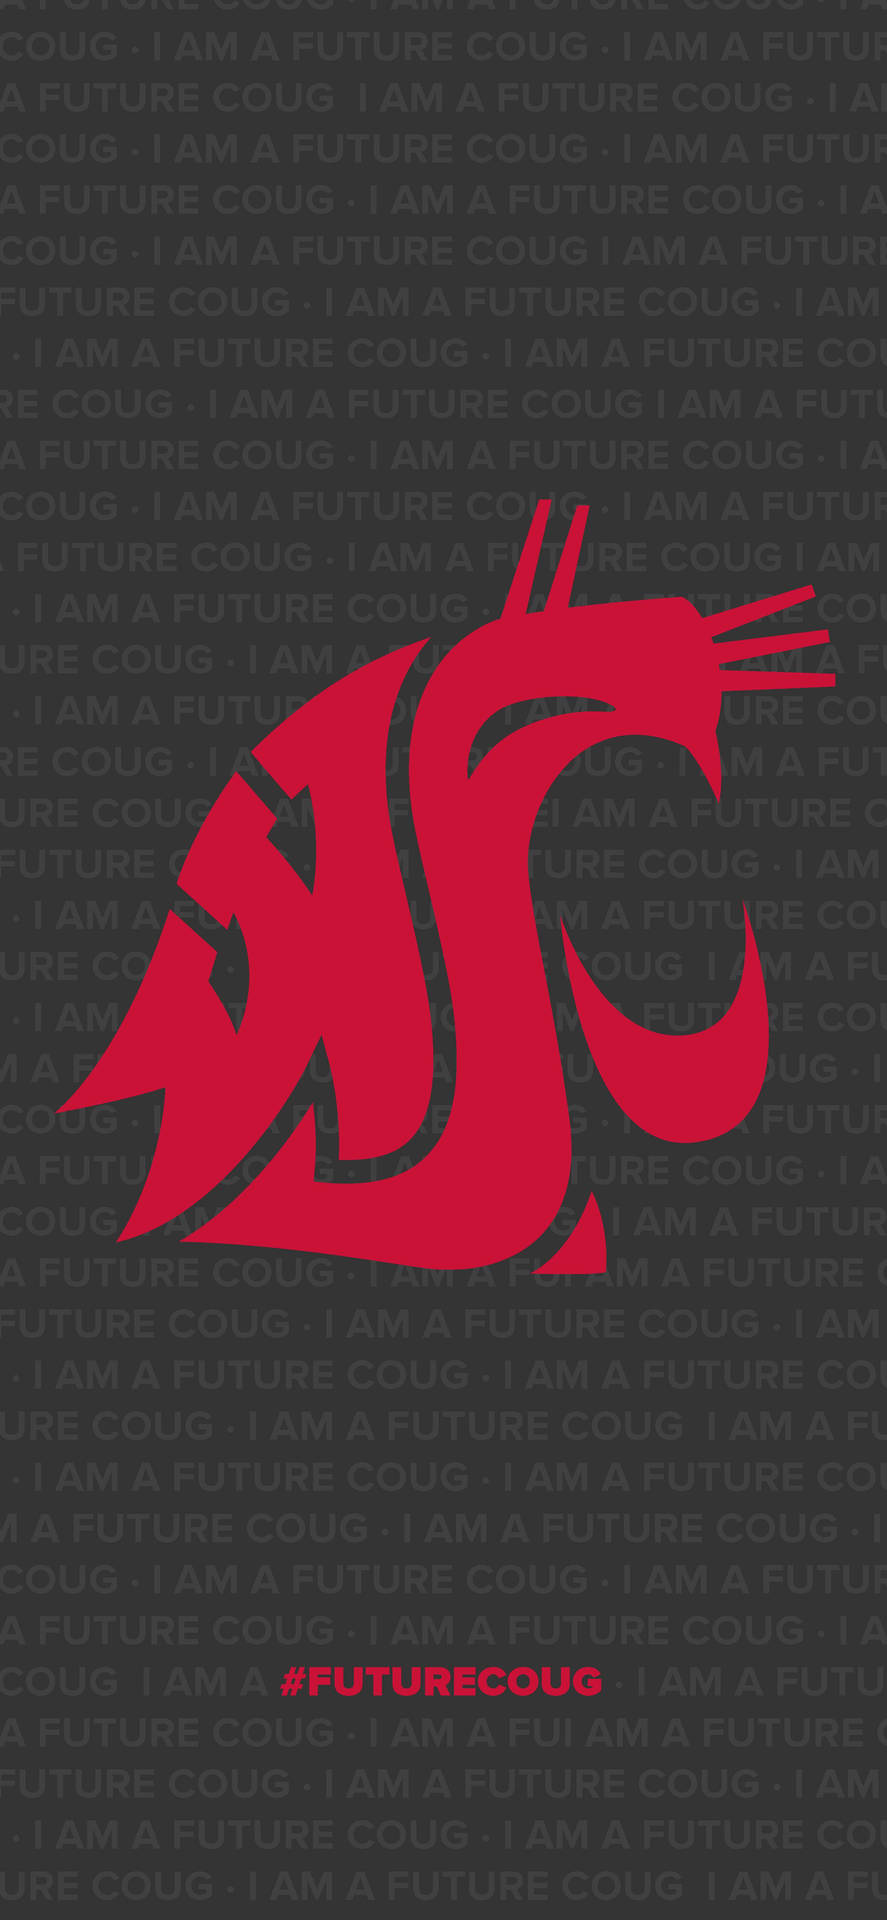 Future Coug at Washington State University Wallpaper